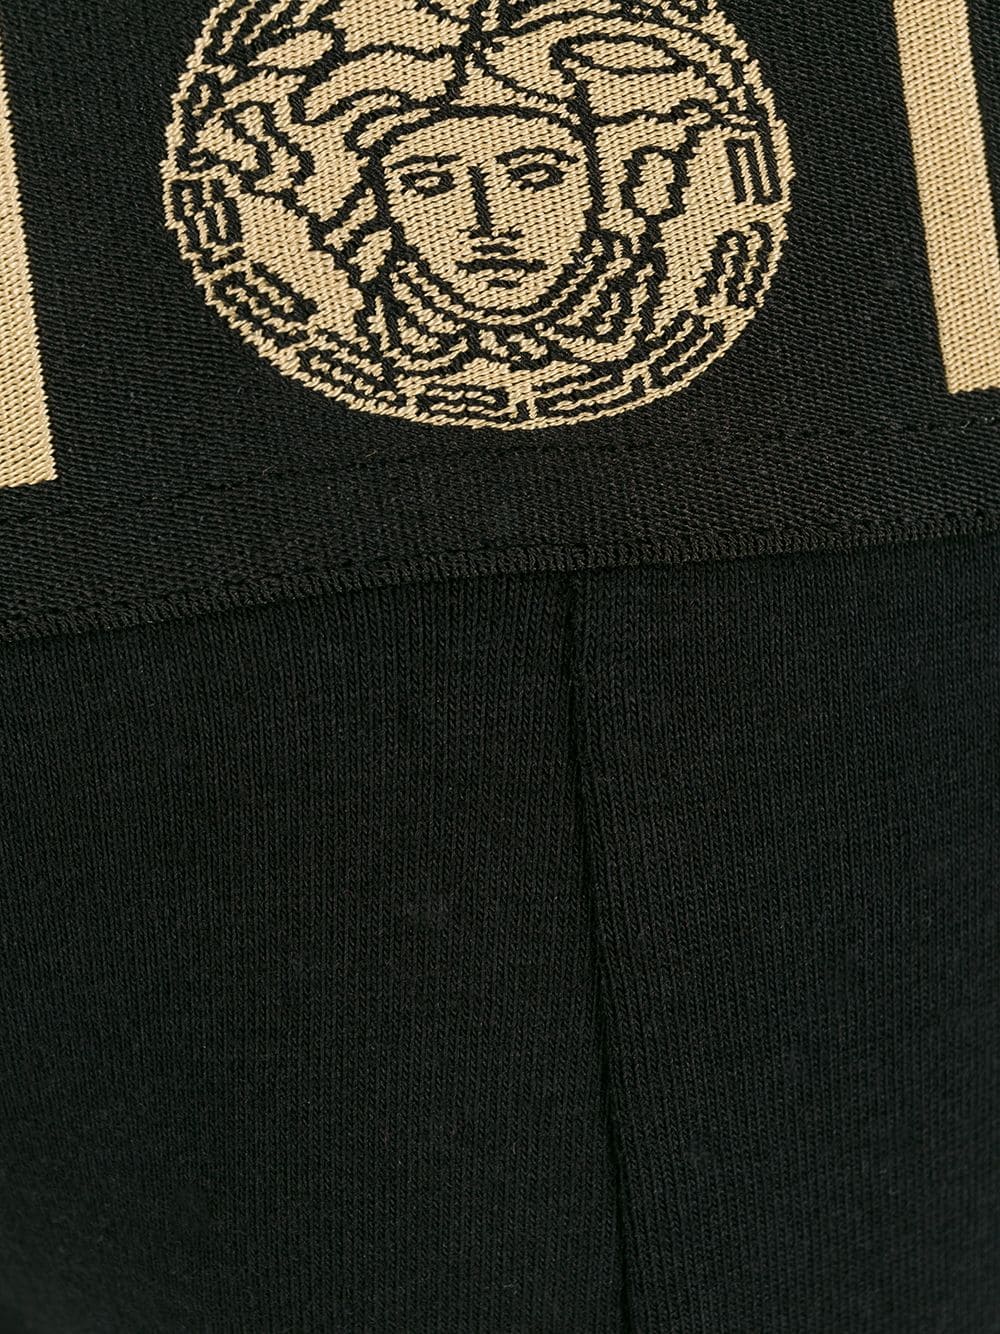 Versace Greek key motif jockstrap, Men's Clothing